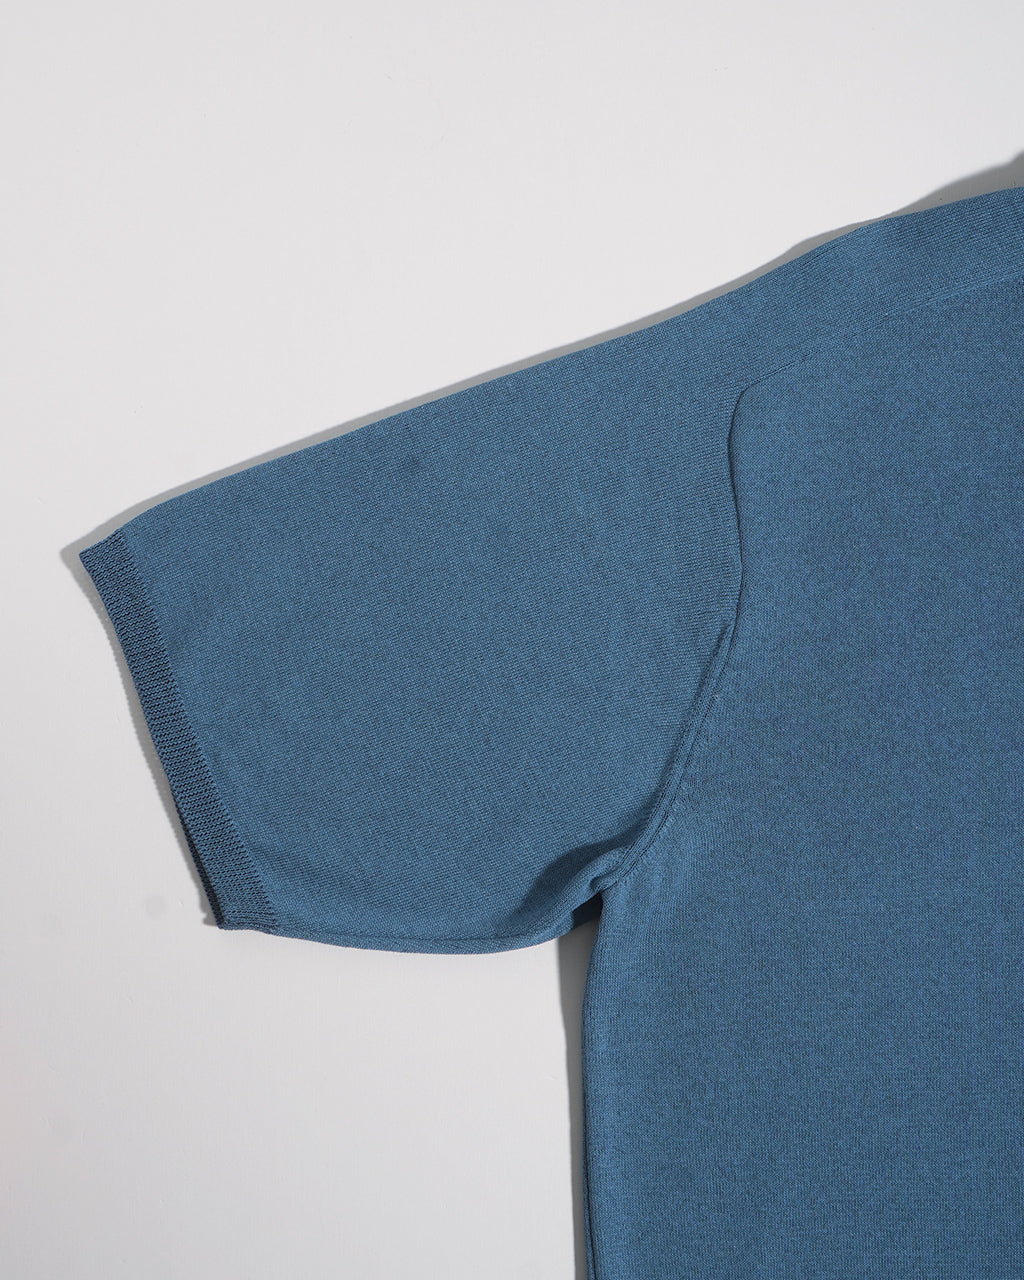 STILL BY HAND スティルバイハンド メランジェ ニット Tシャツ Melange knit t-shirt 半袖 カットソー メンズ  KN02241【送料無料】